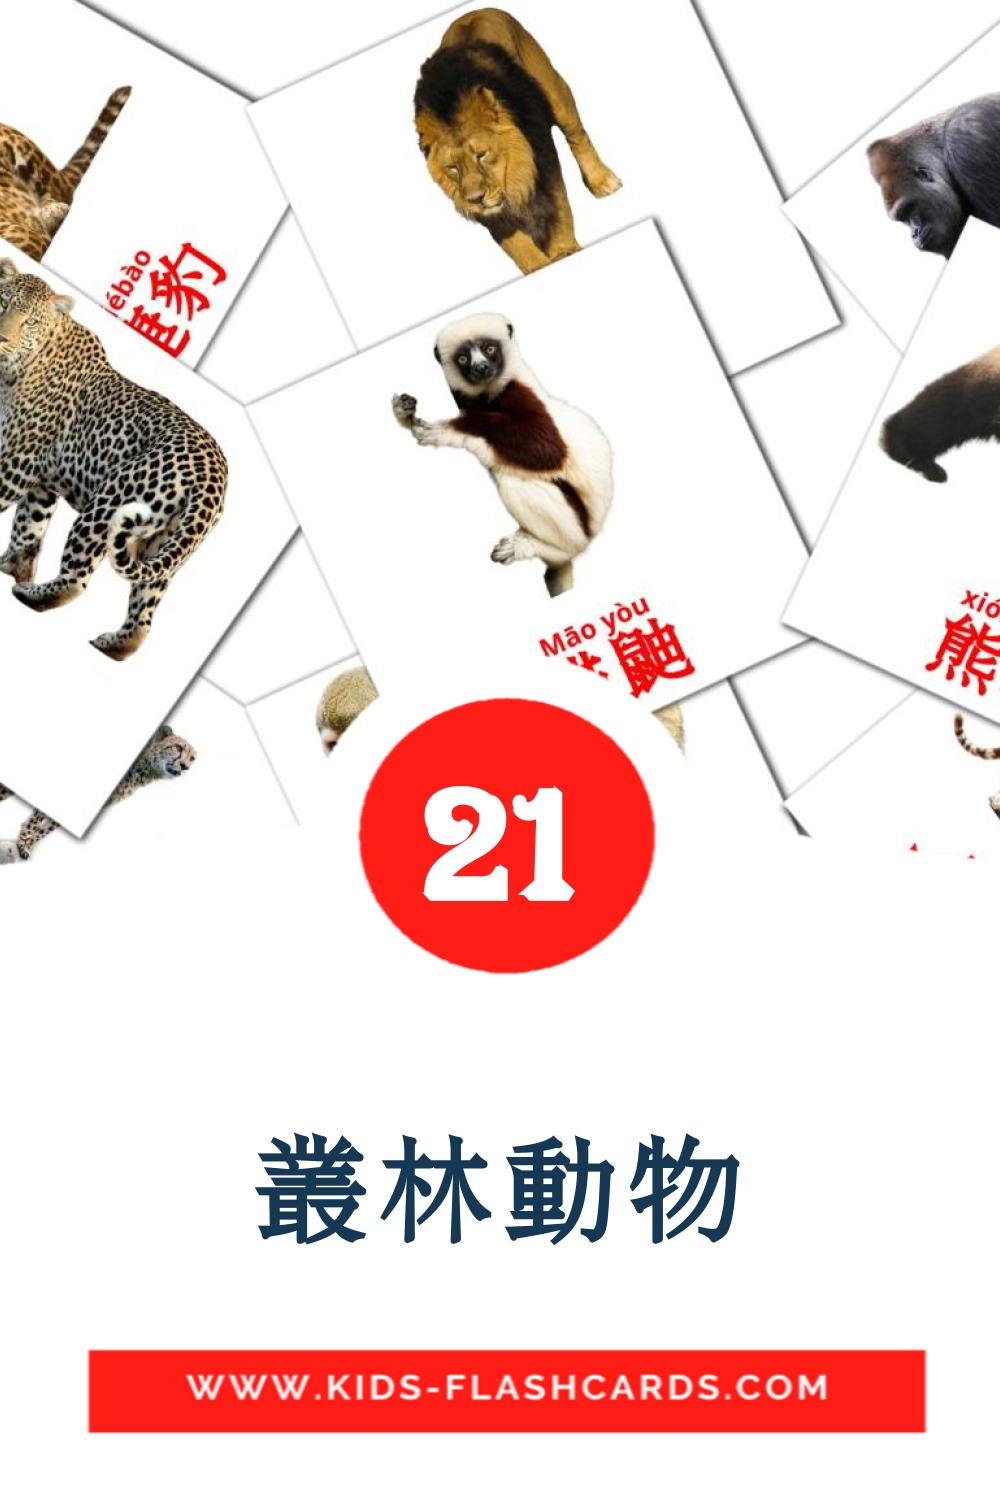 21 叢林動物 Bildkarten für den Kindergarten auf Kantonesisch